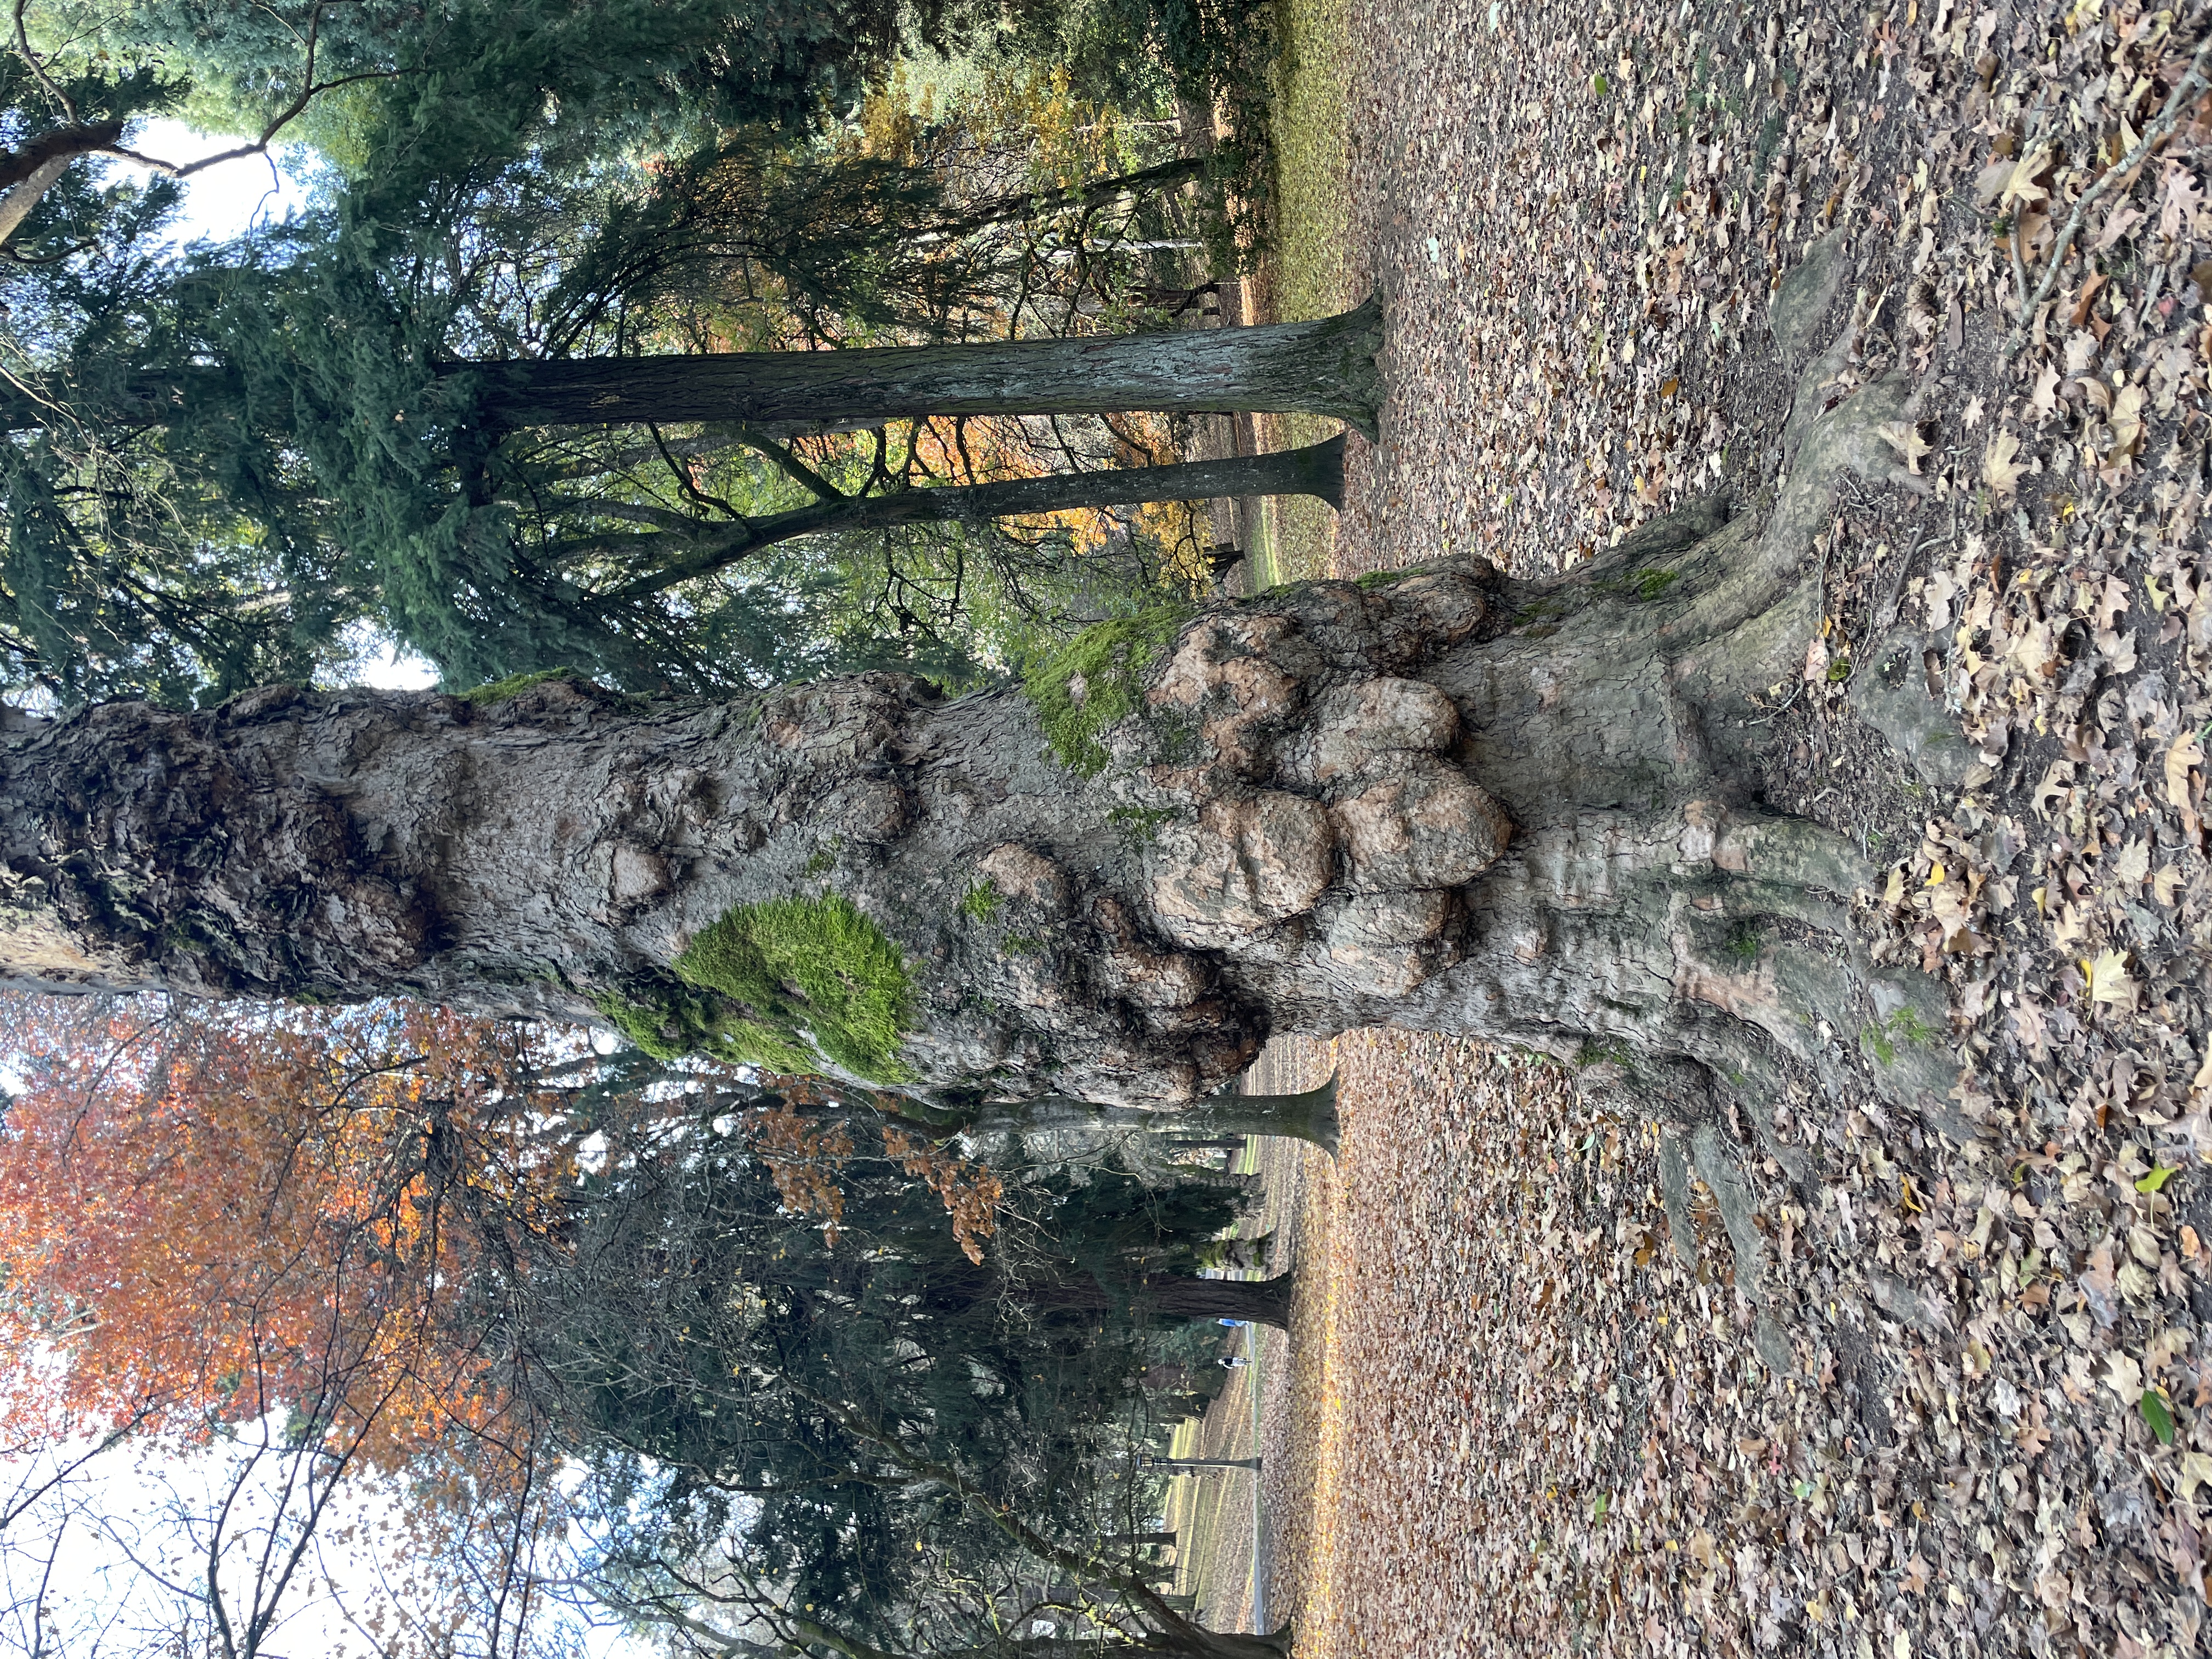 A tree with a bulbous trunk in Laurelhurst Park, Portland, Oregon.